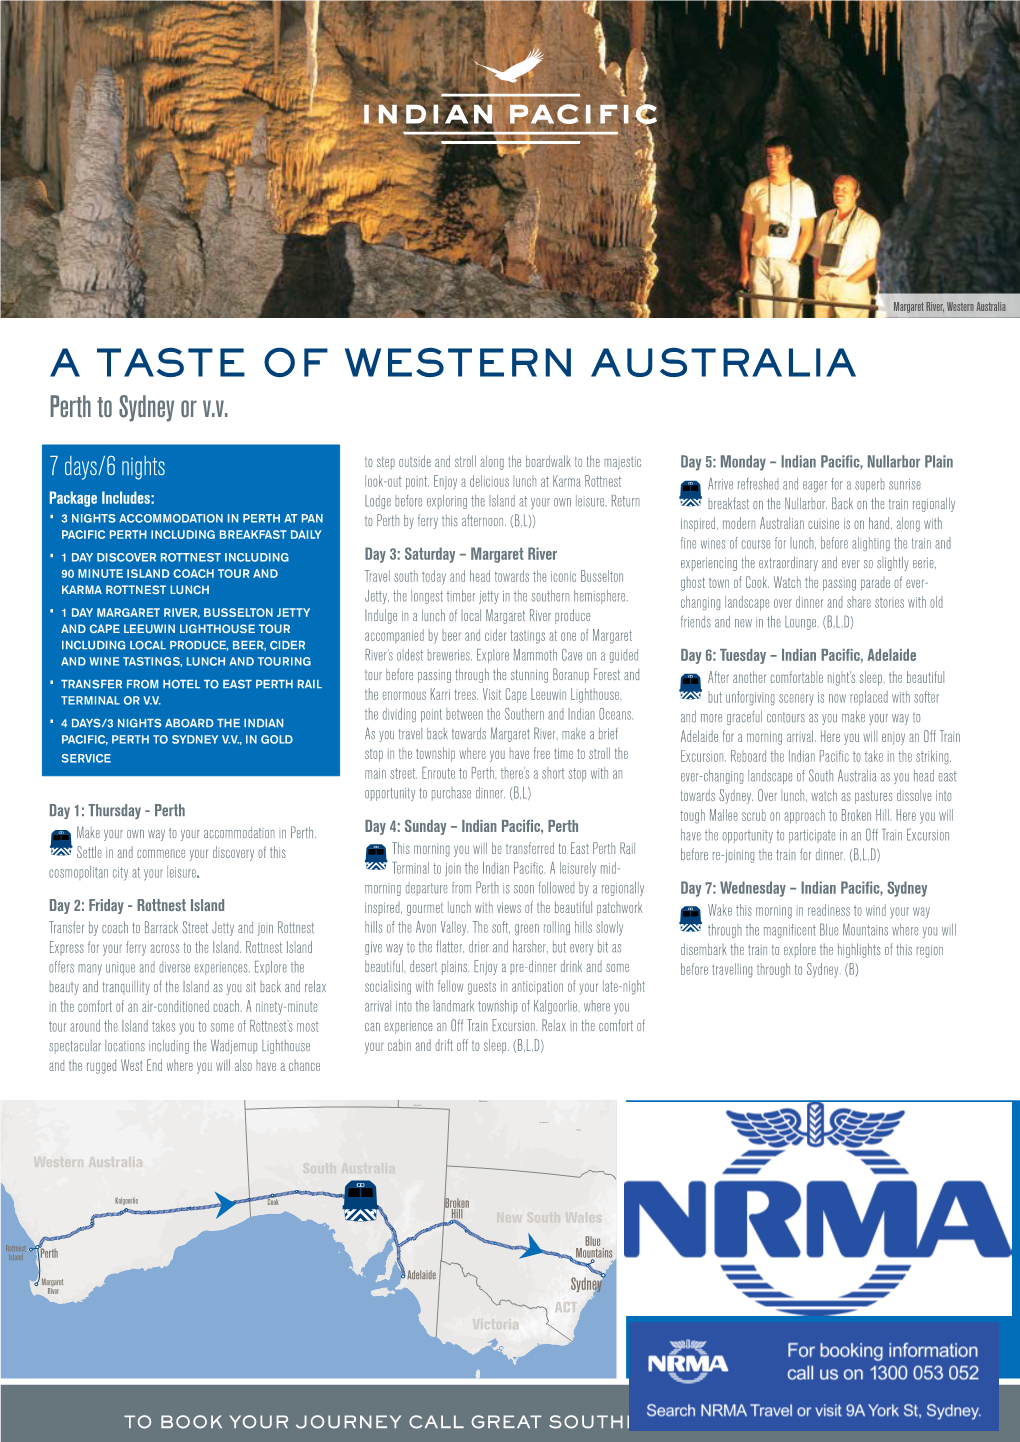 A Taste of Western Australia Itinerary